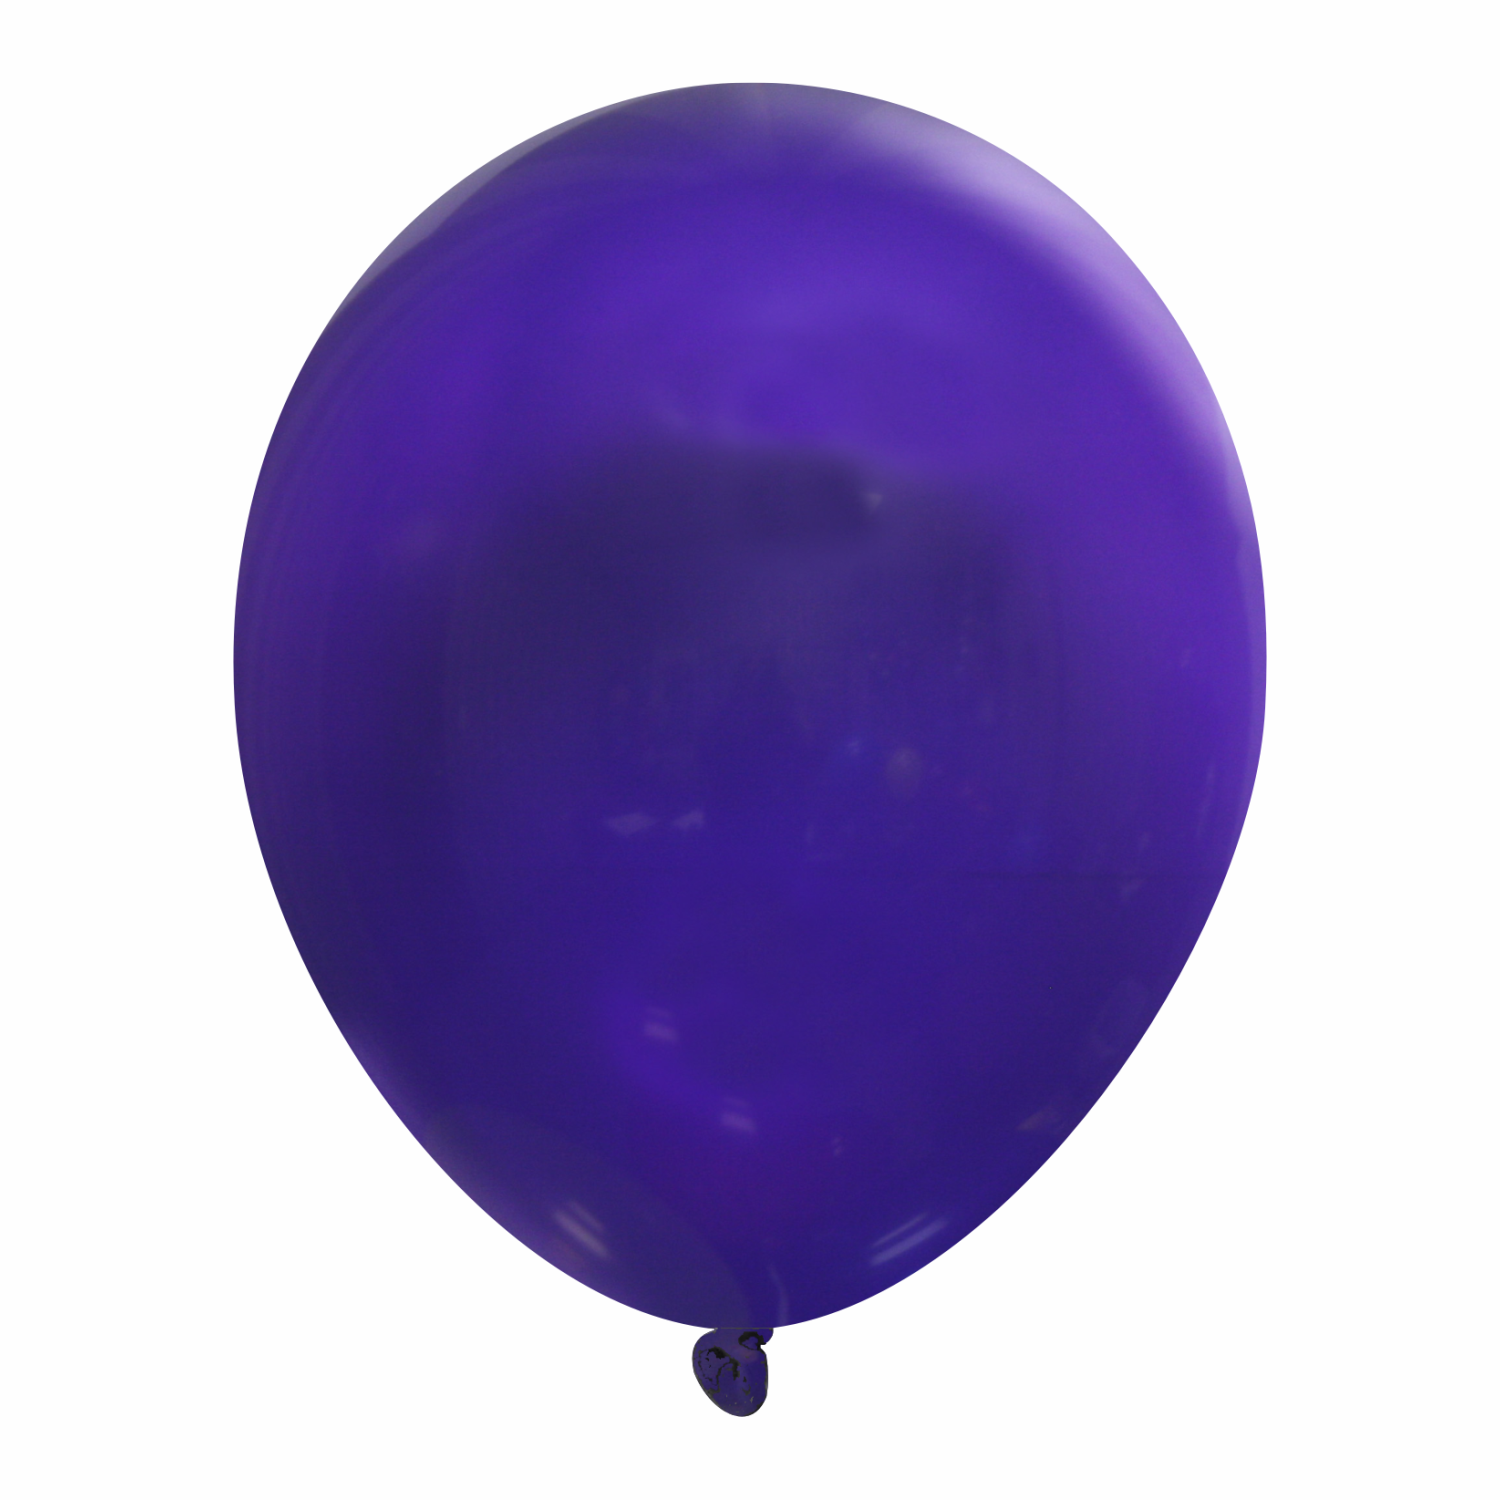 http://images.officebrain.com/migration-api-hidden-new/web/images/626/14cry-deep-purple.png